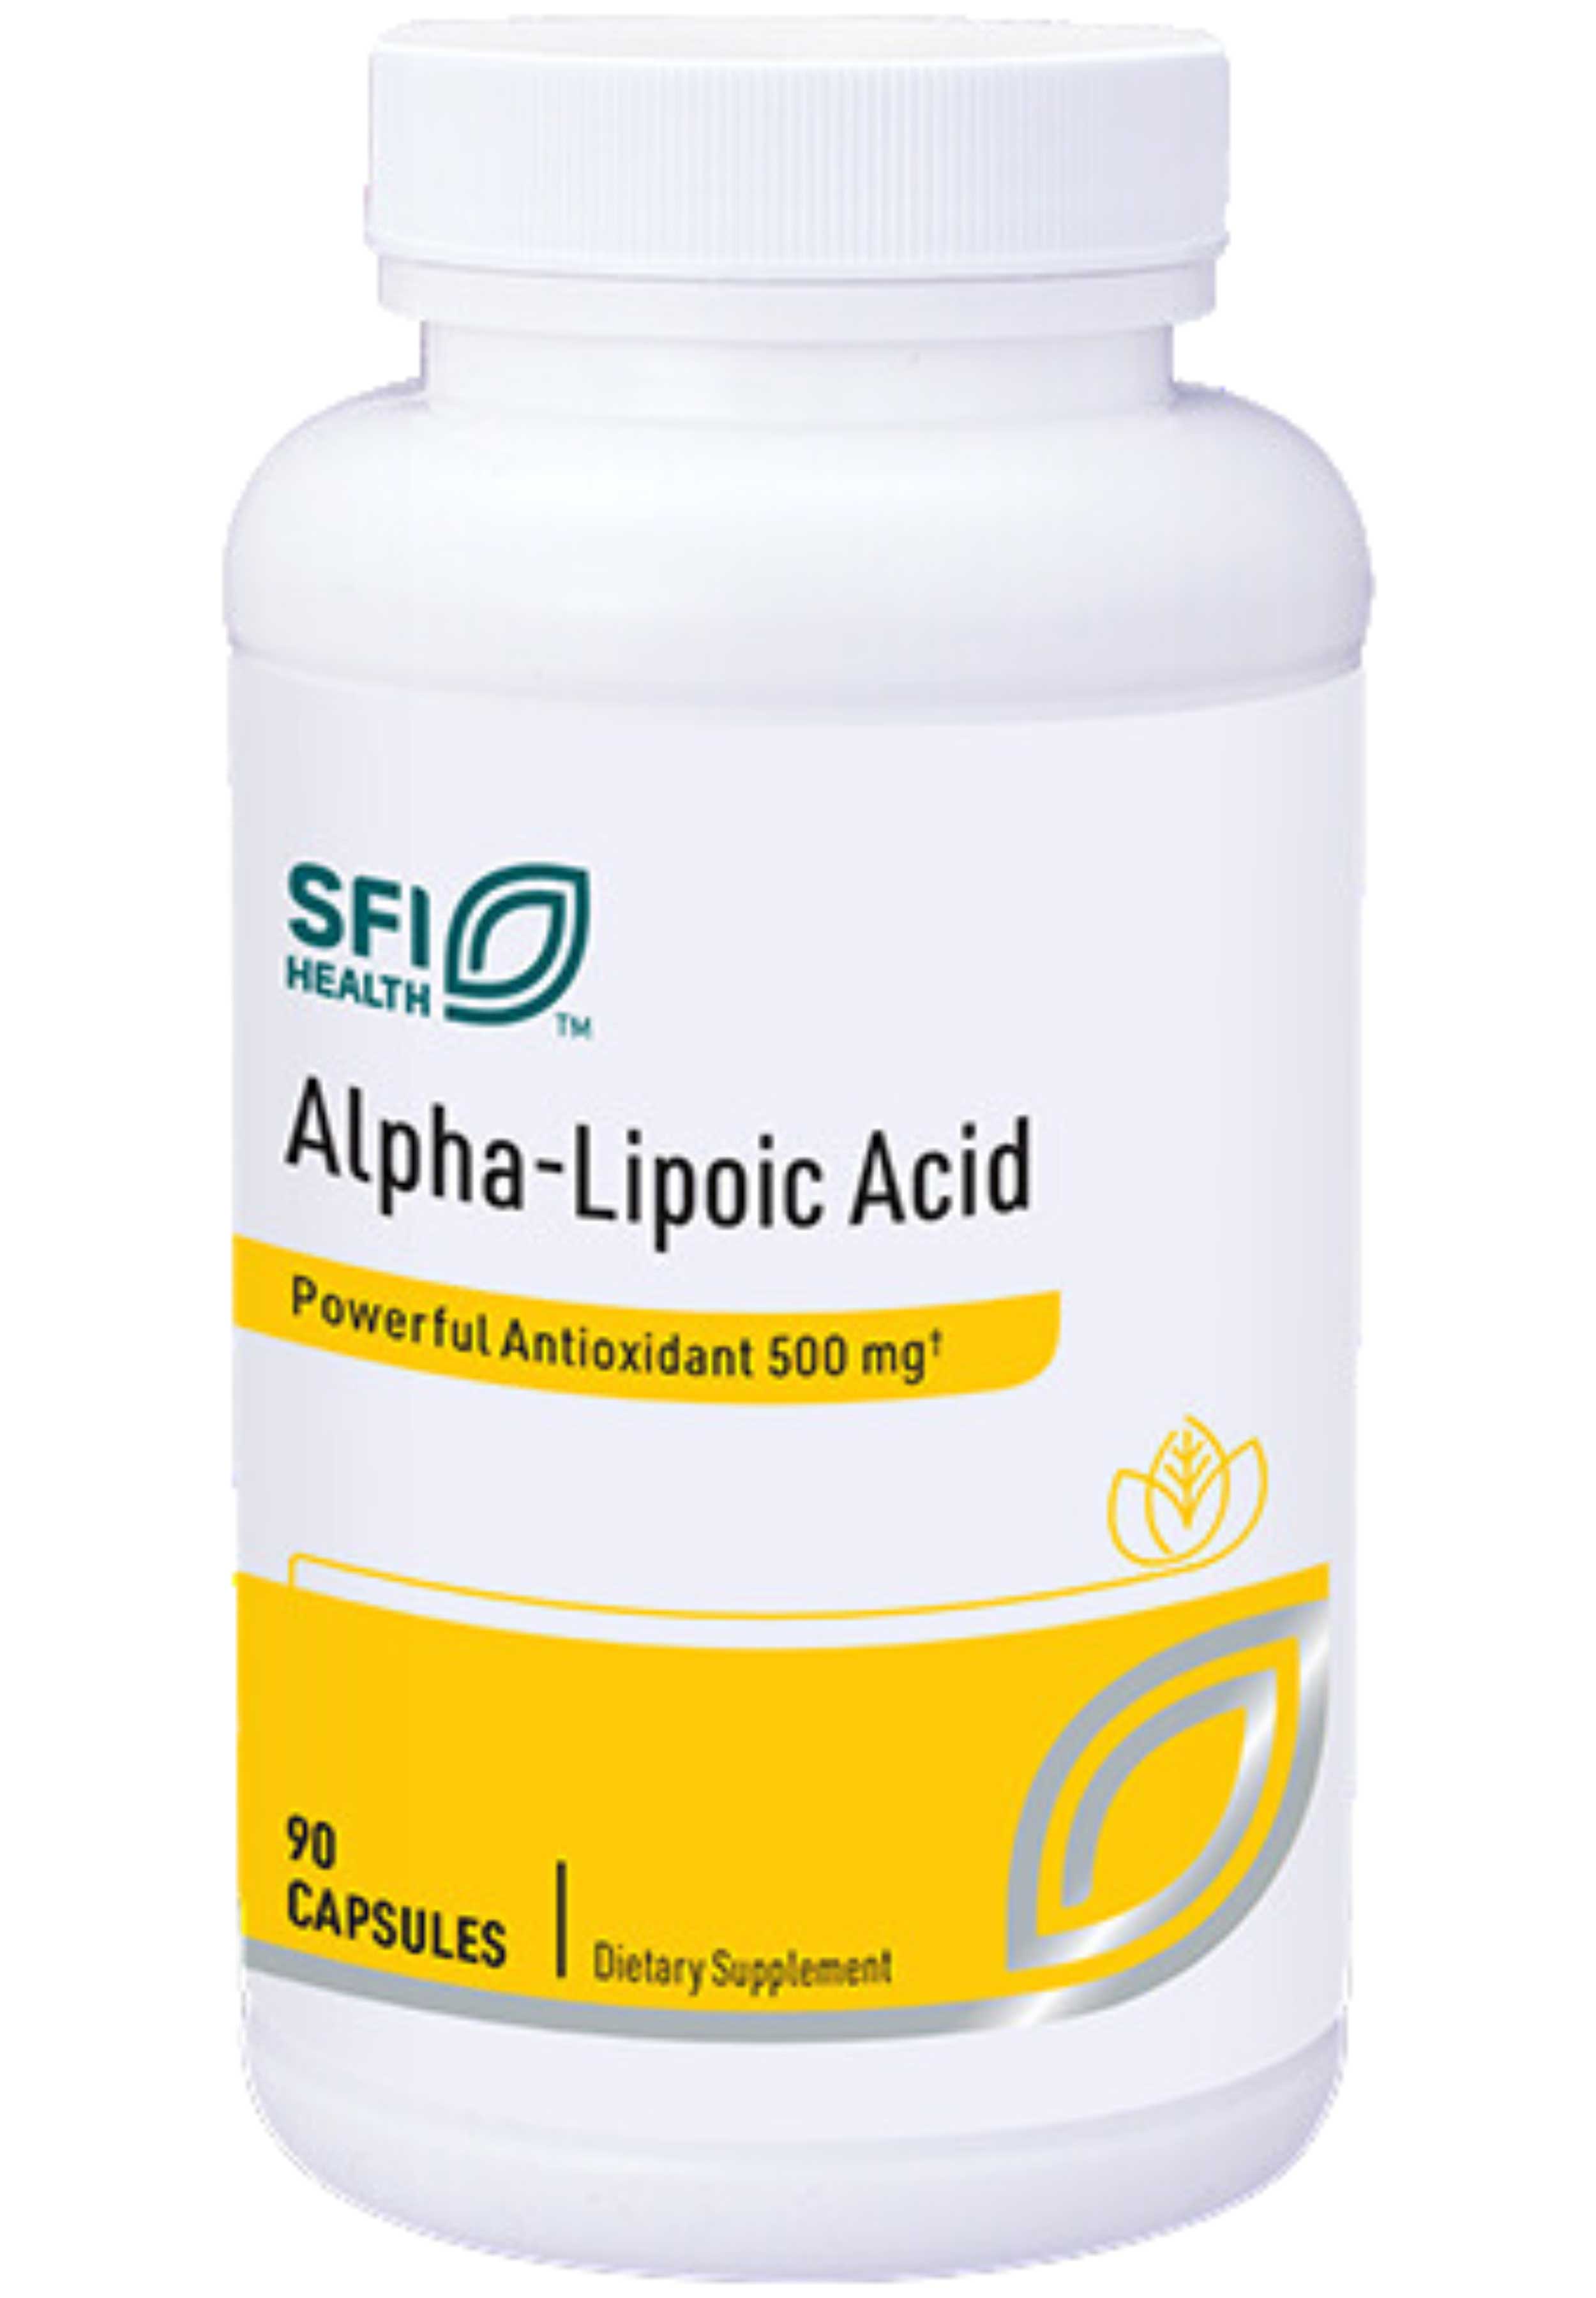 Klaire Labs Alpha-Lipoic Acid 500 mg